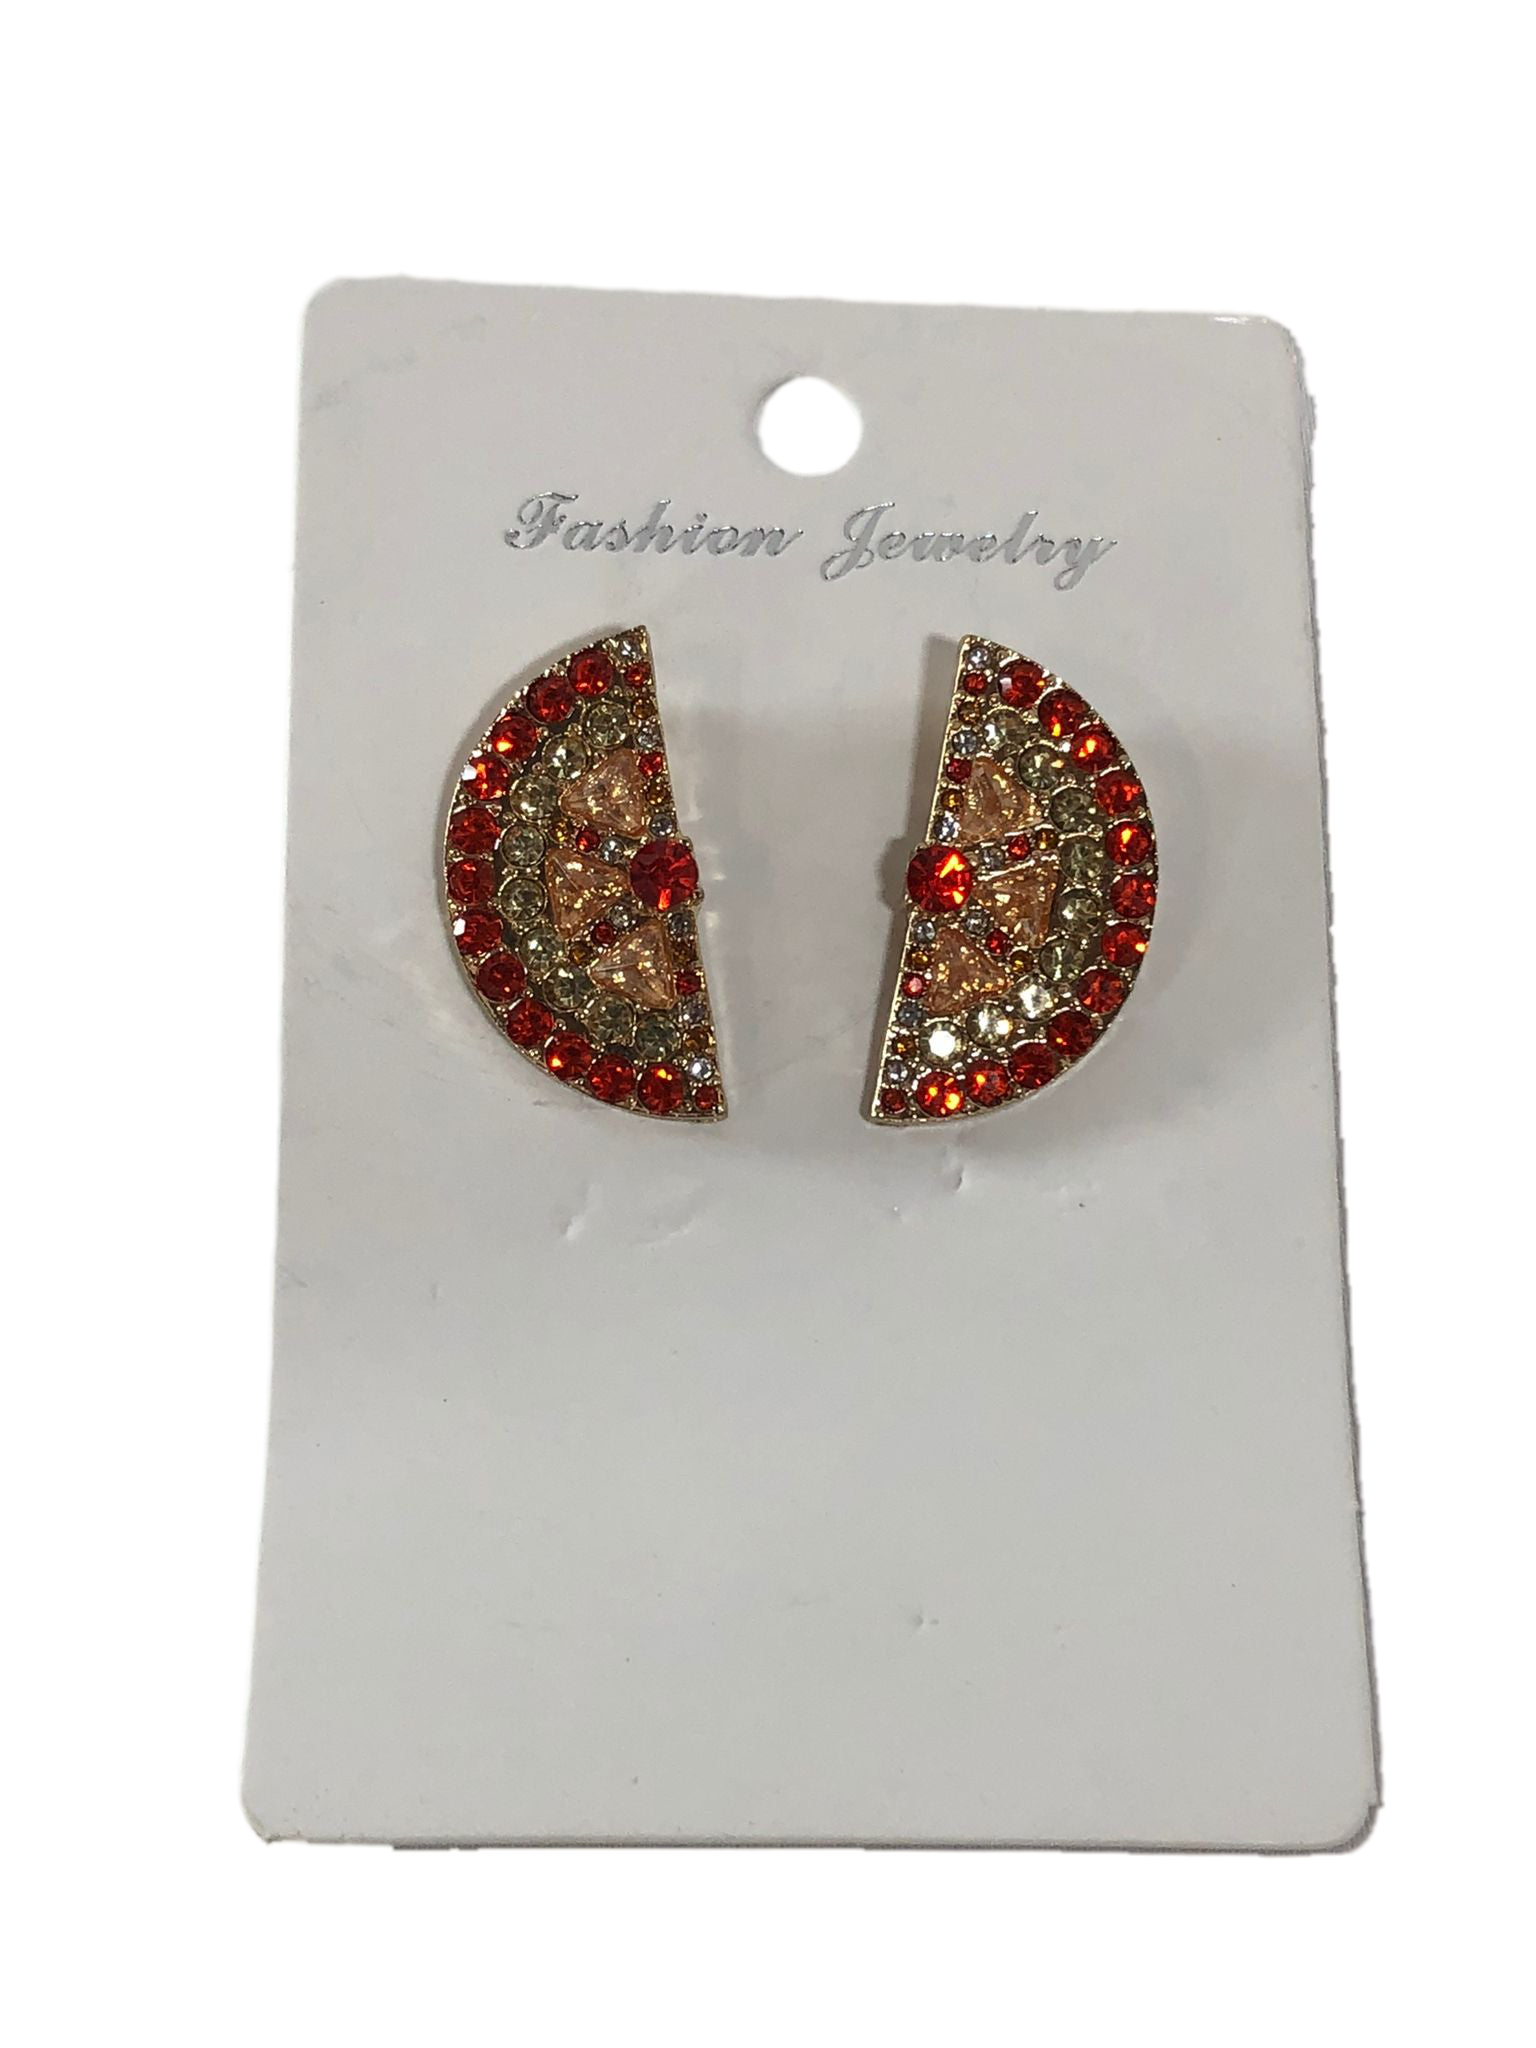 Grapefruit Dangle Earrings with Diamonds - Fresh Fruit Jewelry for Women